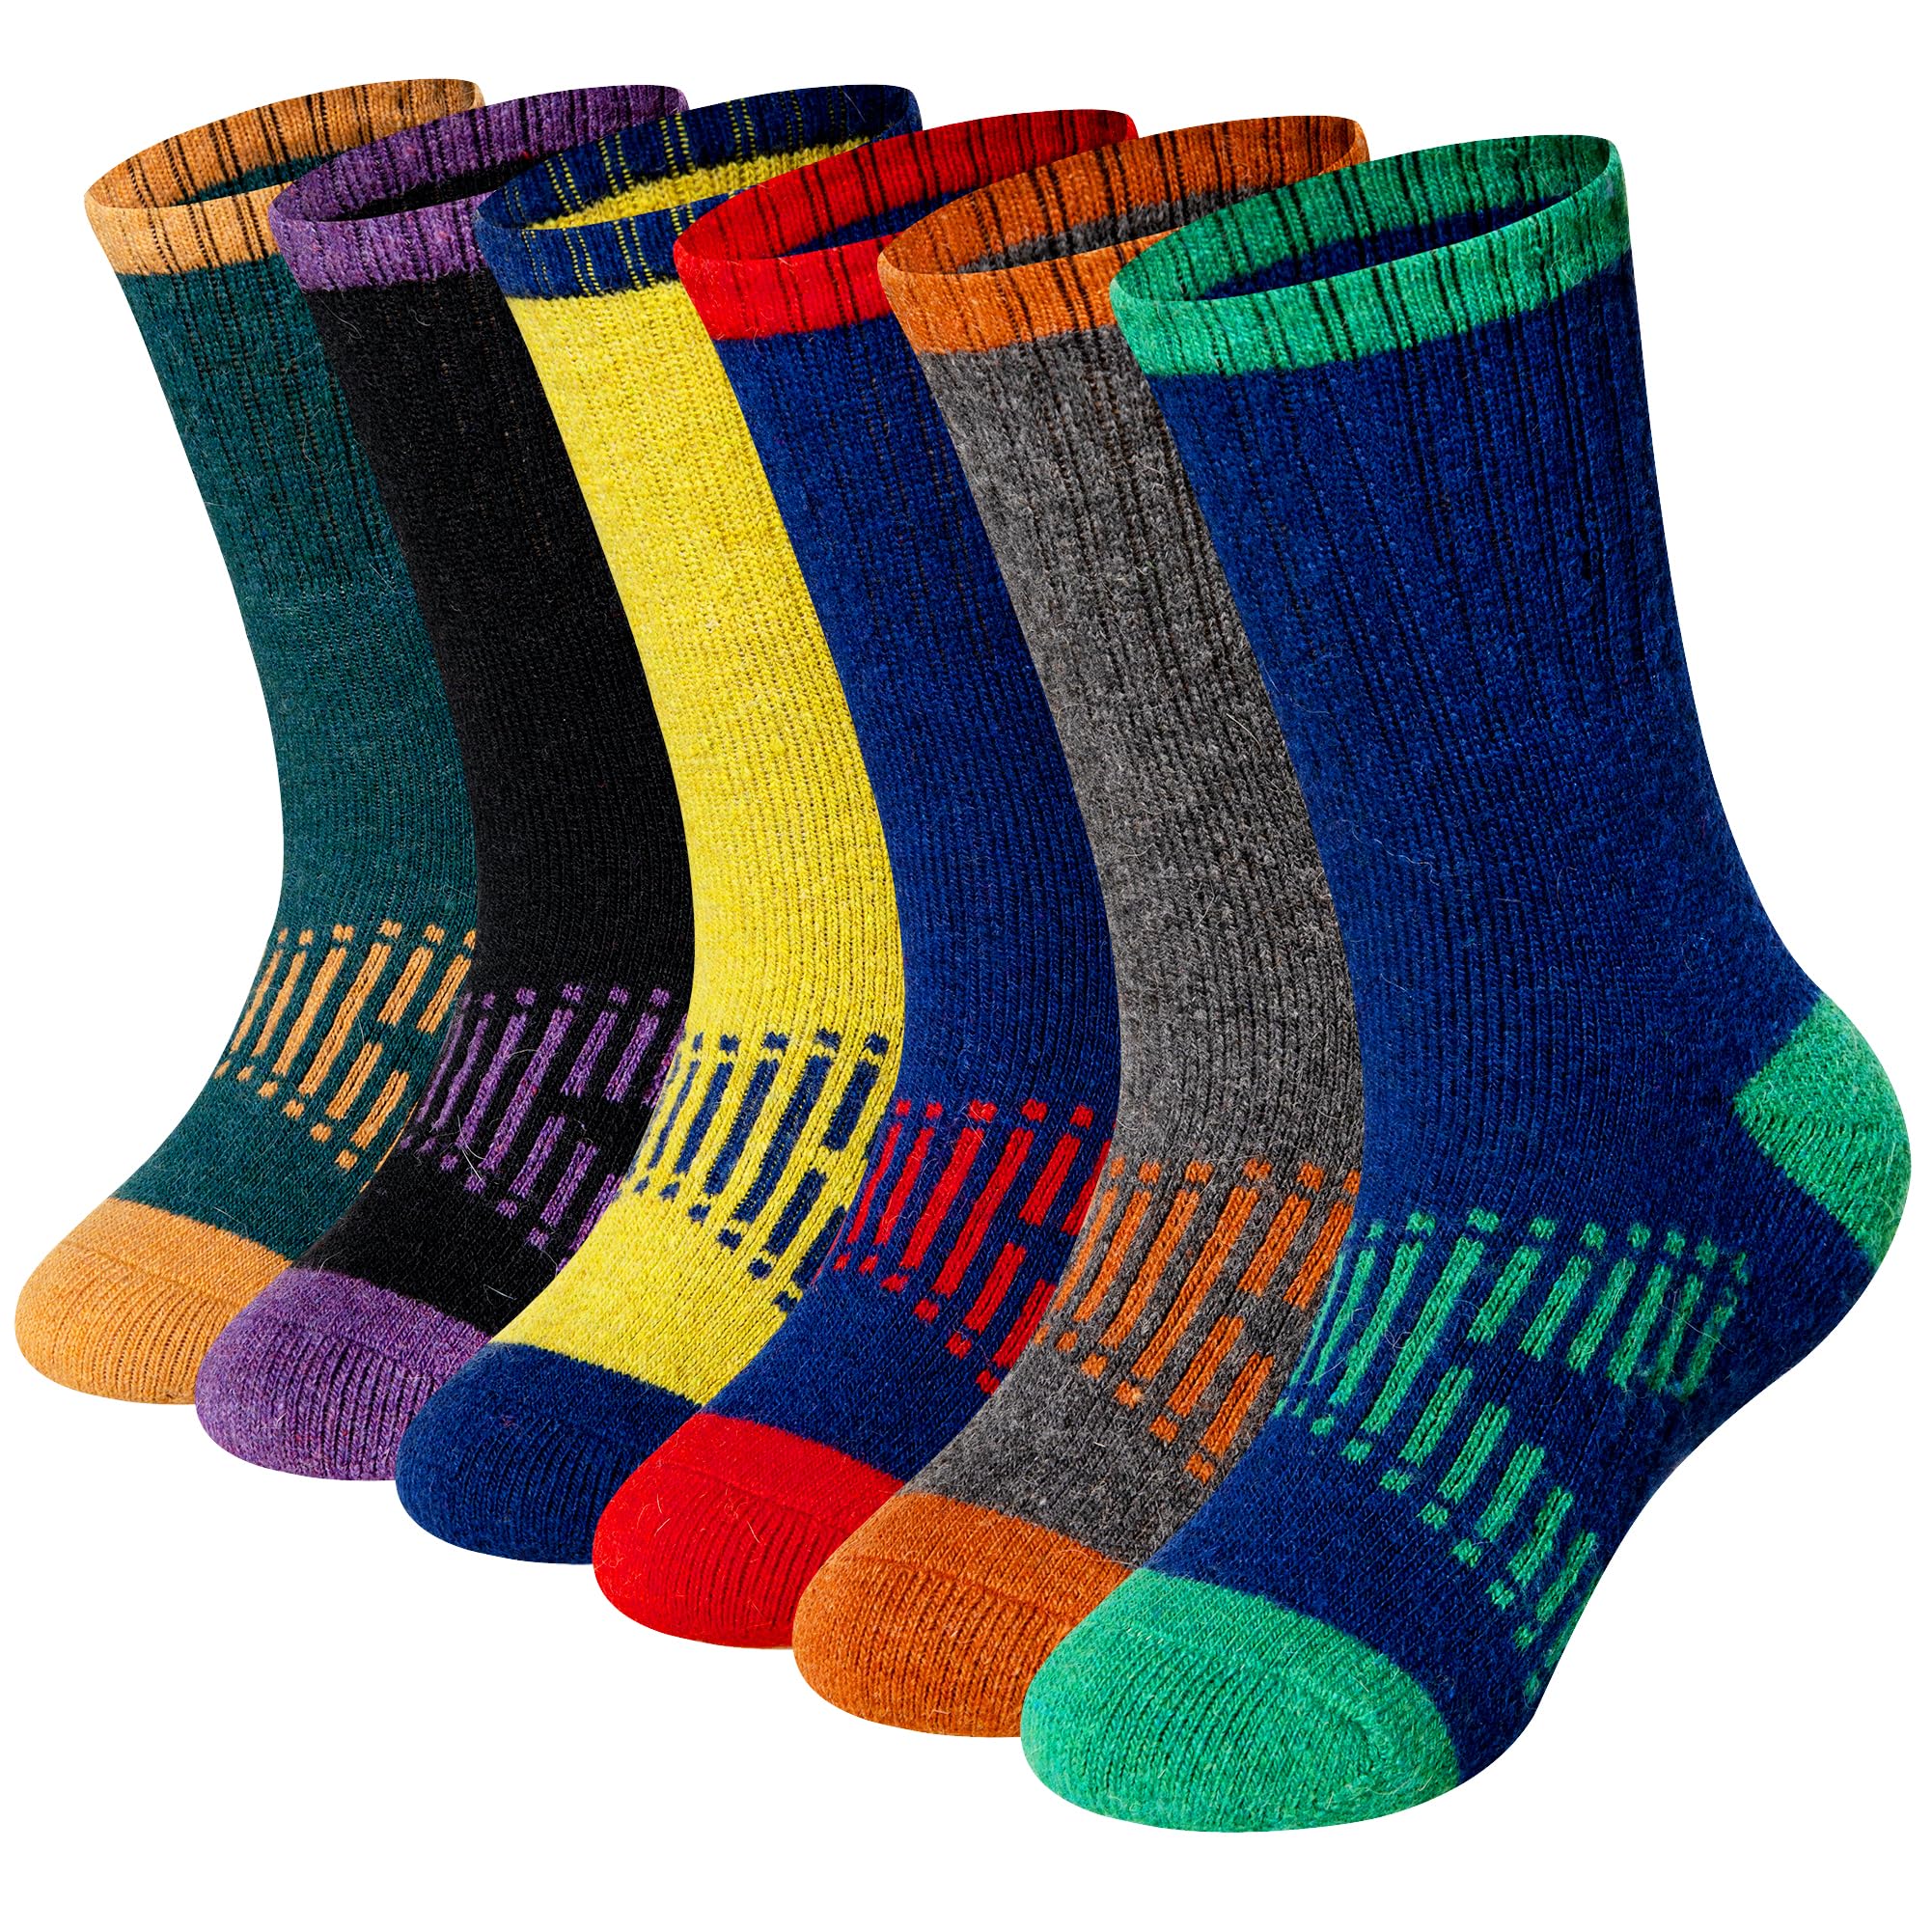 WEVIAS Kids Merino Wool Hiking Socks Boys Girls Thermal Winter Cozy Boot Warm Cushion Socks 6 Pairs